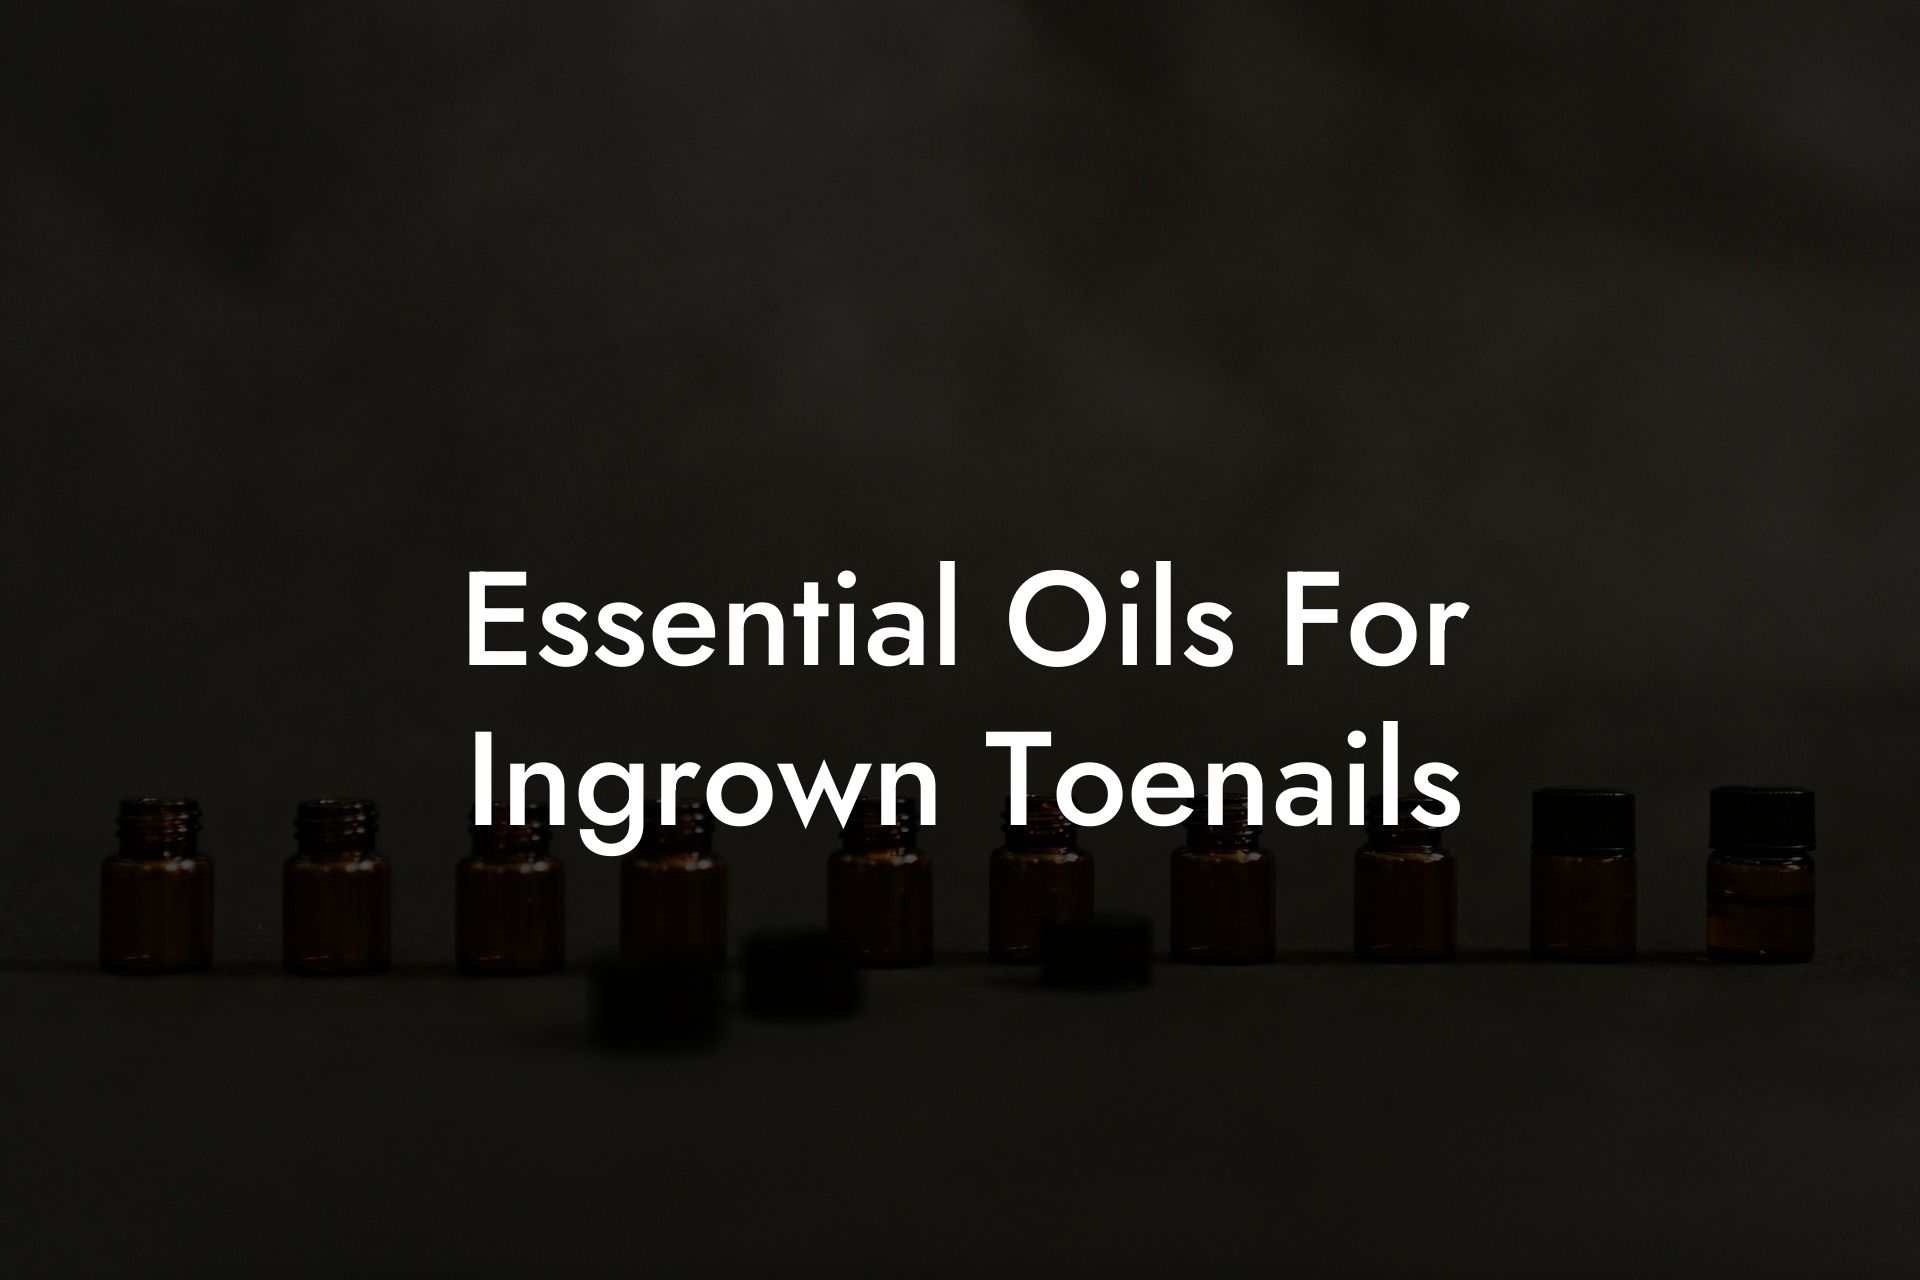 Essential Oils For Ingrown Toenails